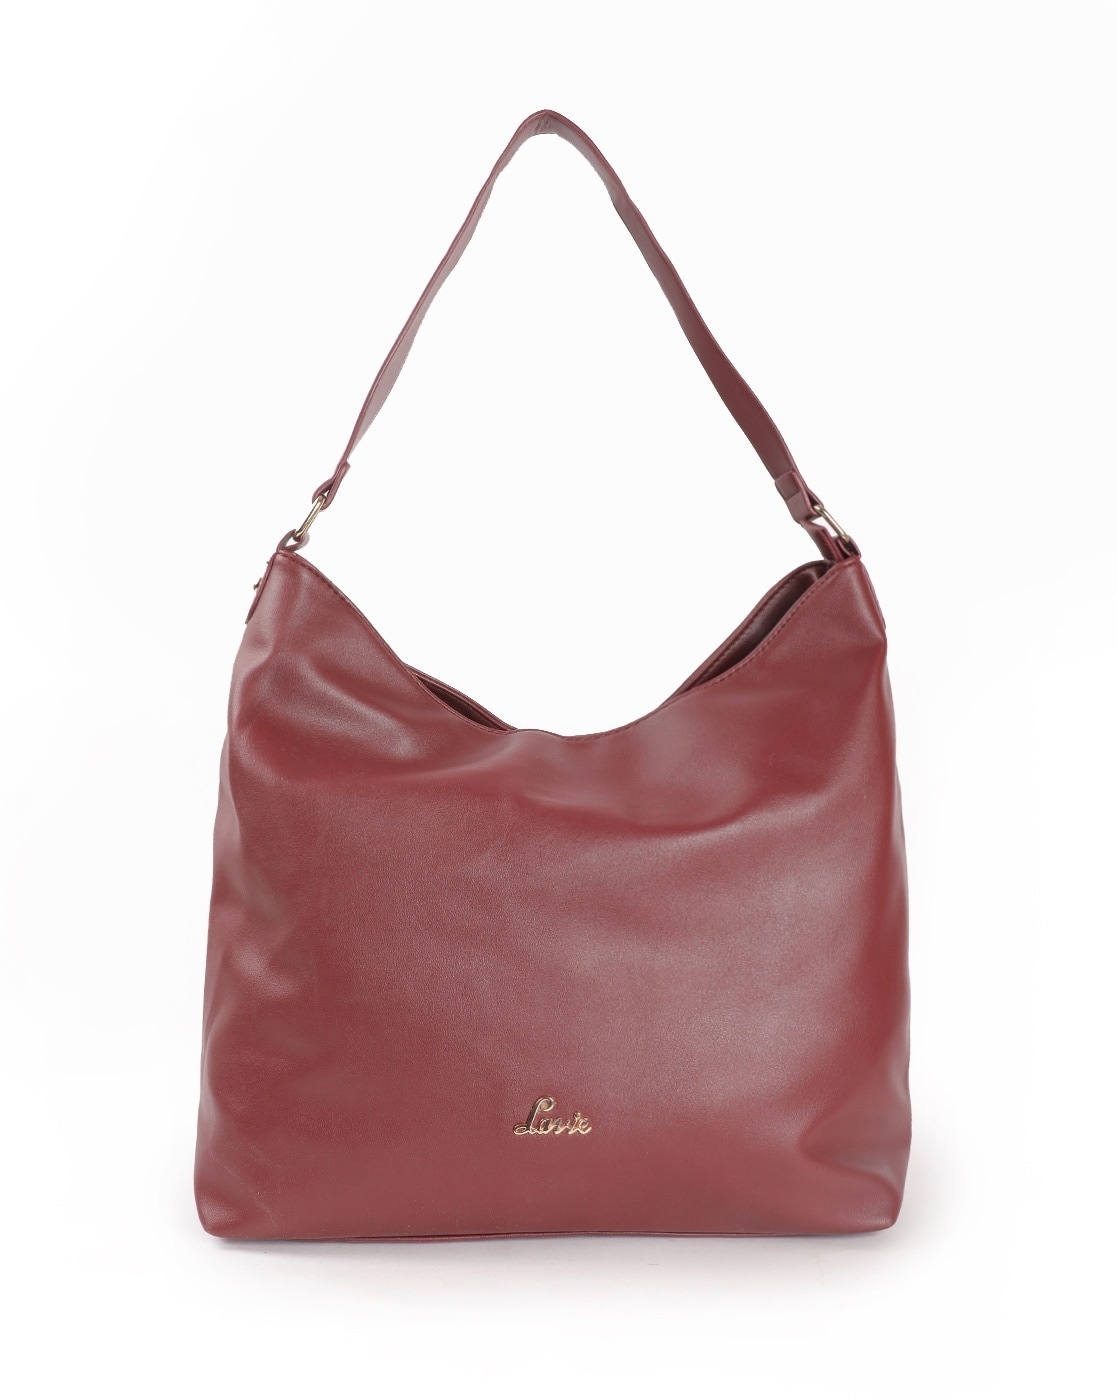 Aqua Madonna Red Hobo Bags for Women | Mercari